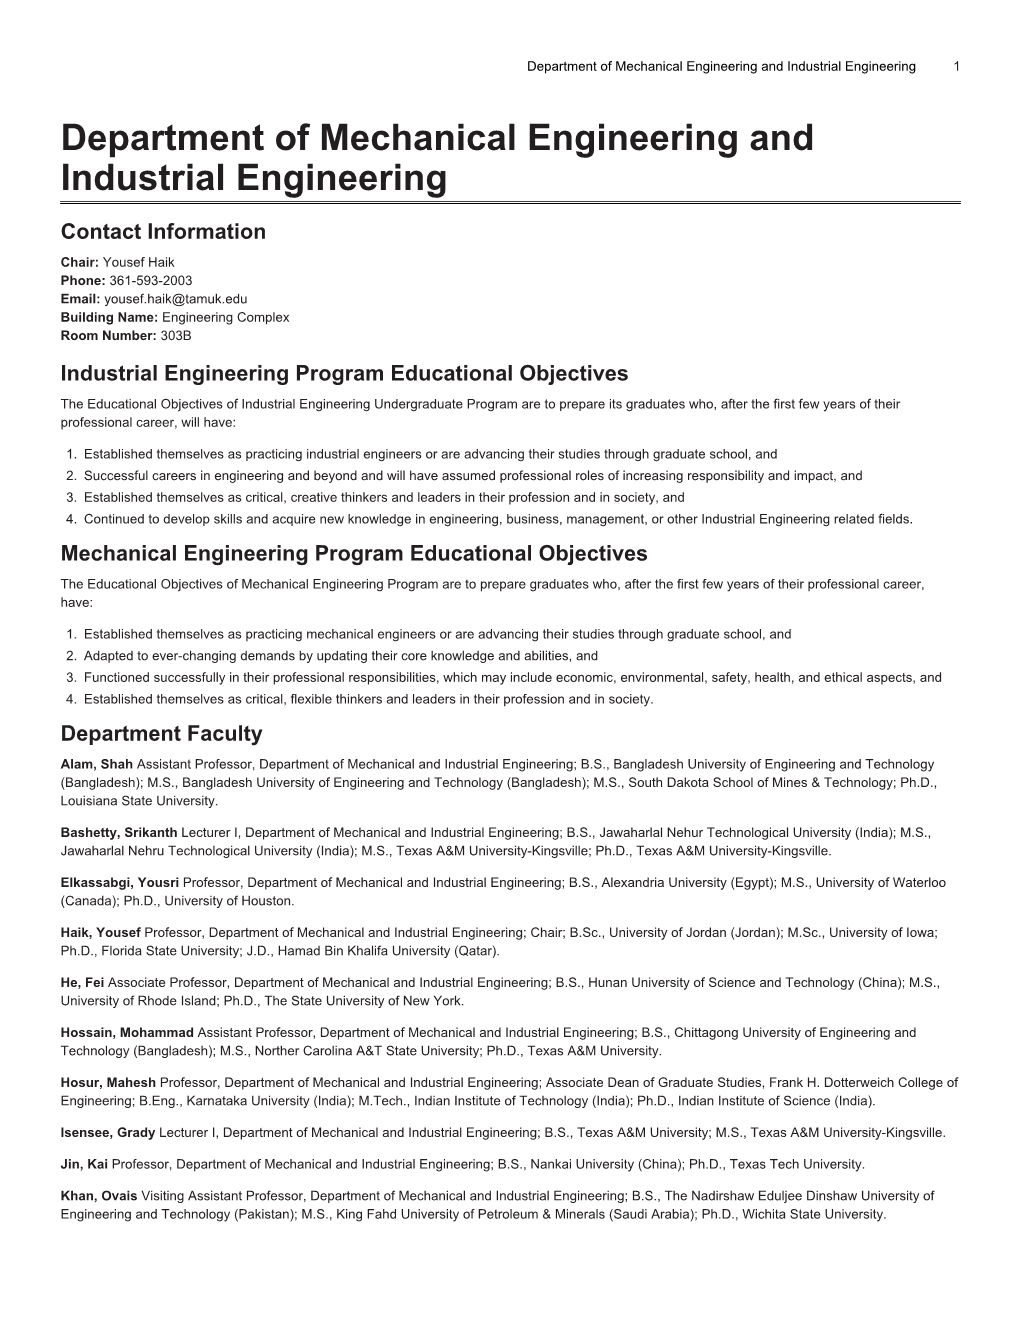 Department of Mechanical Engineering and Industrial Engineering 1